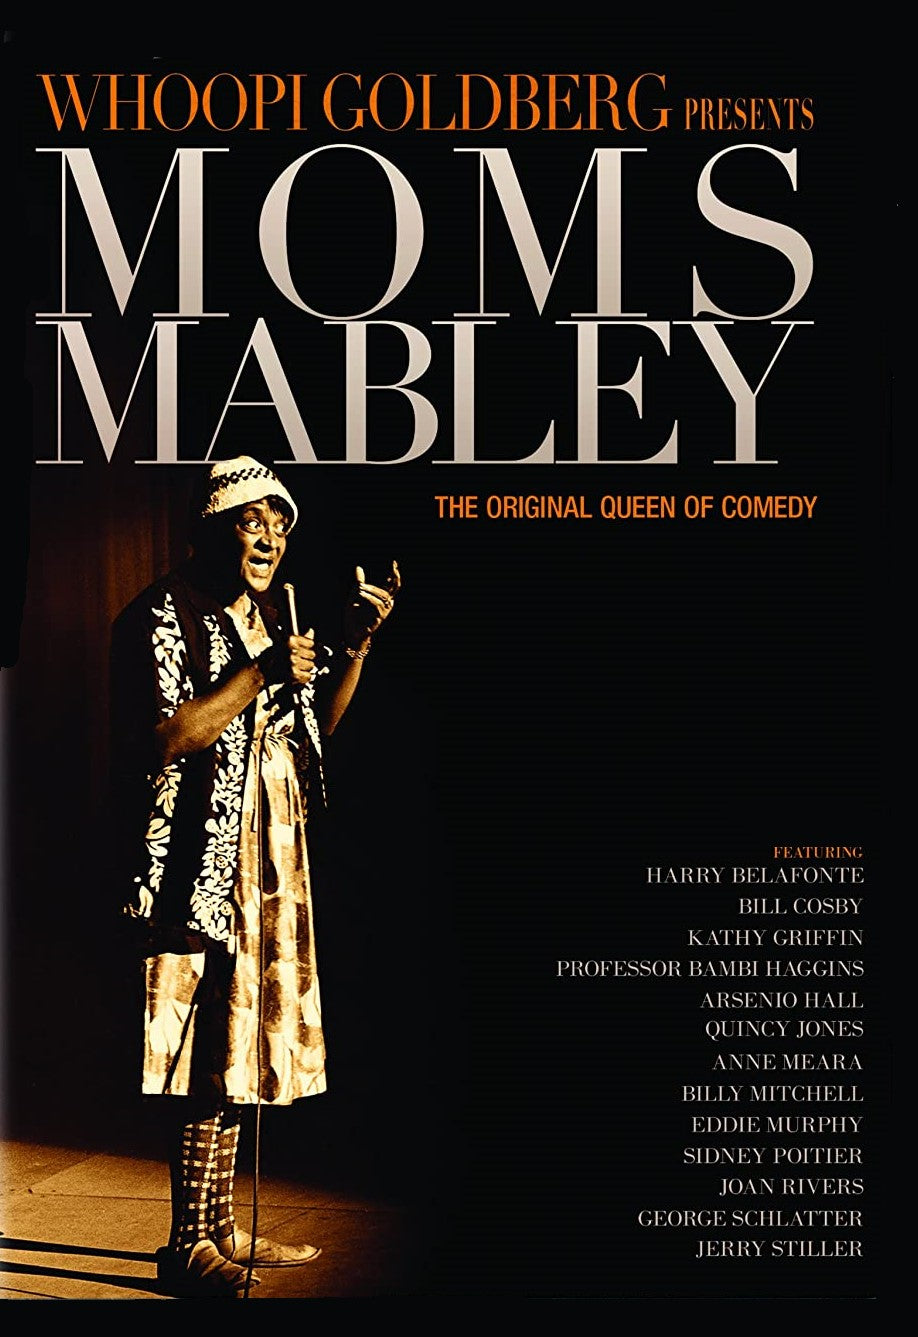 WHOOPI GOLDBERG PRESENTS MOMS MABLEY + BONUS (HBO 2013)